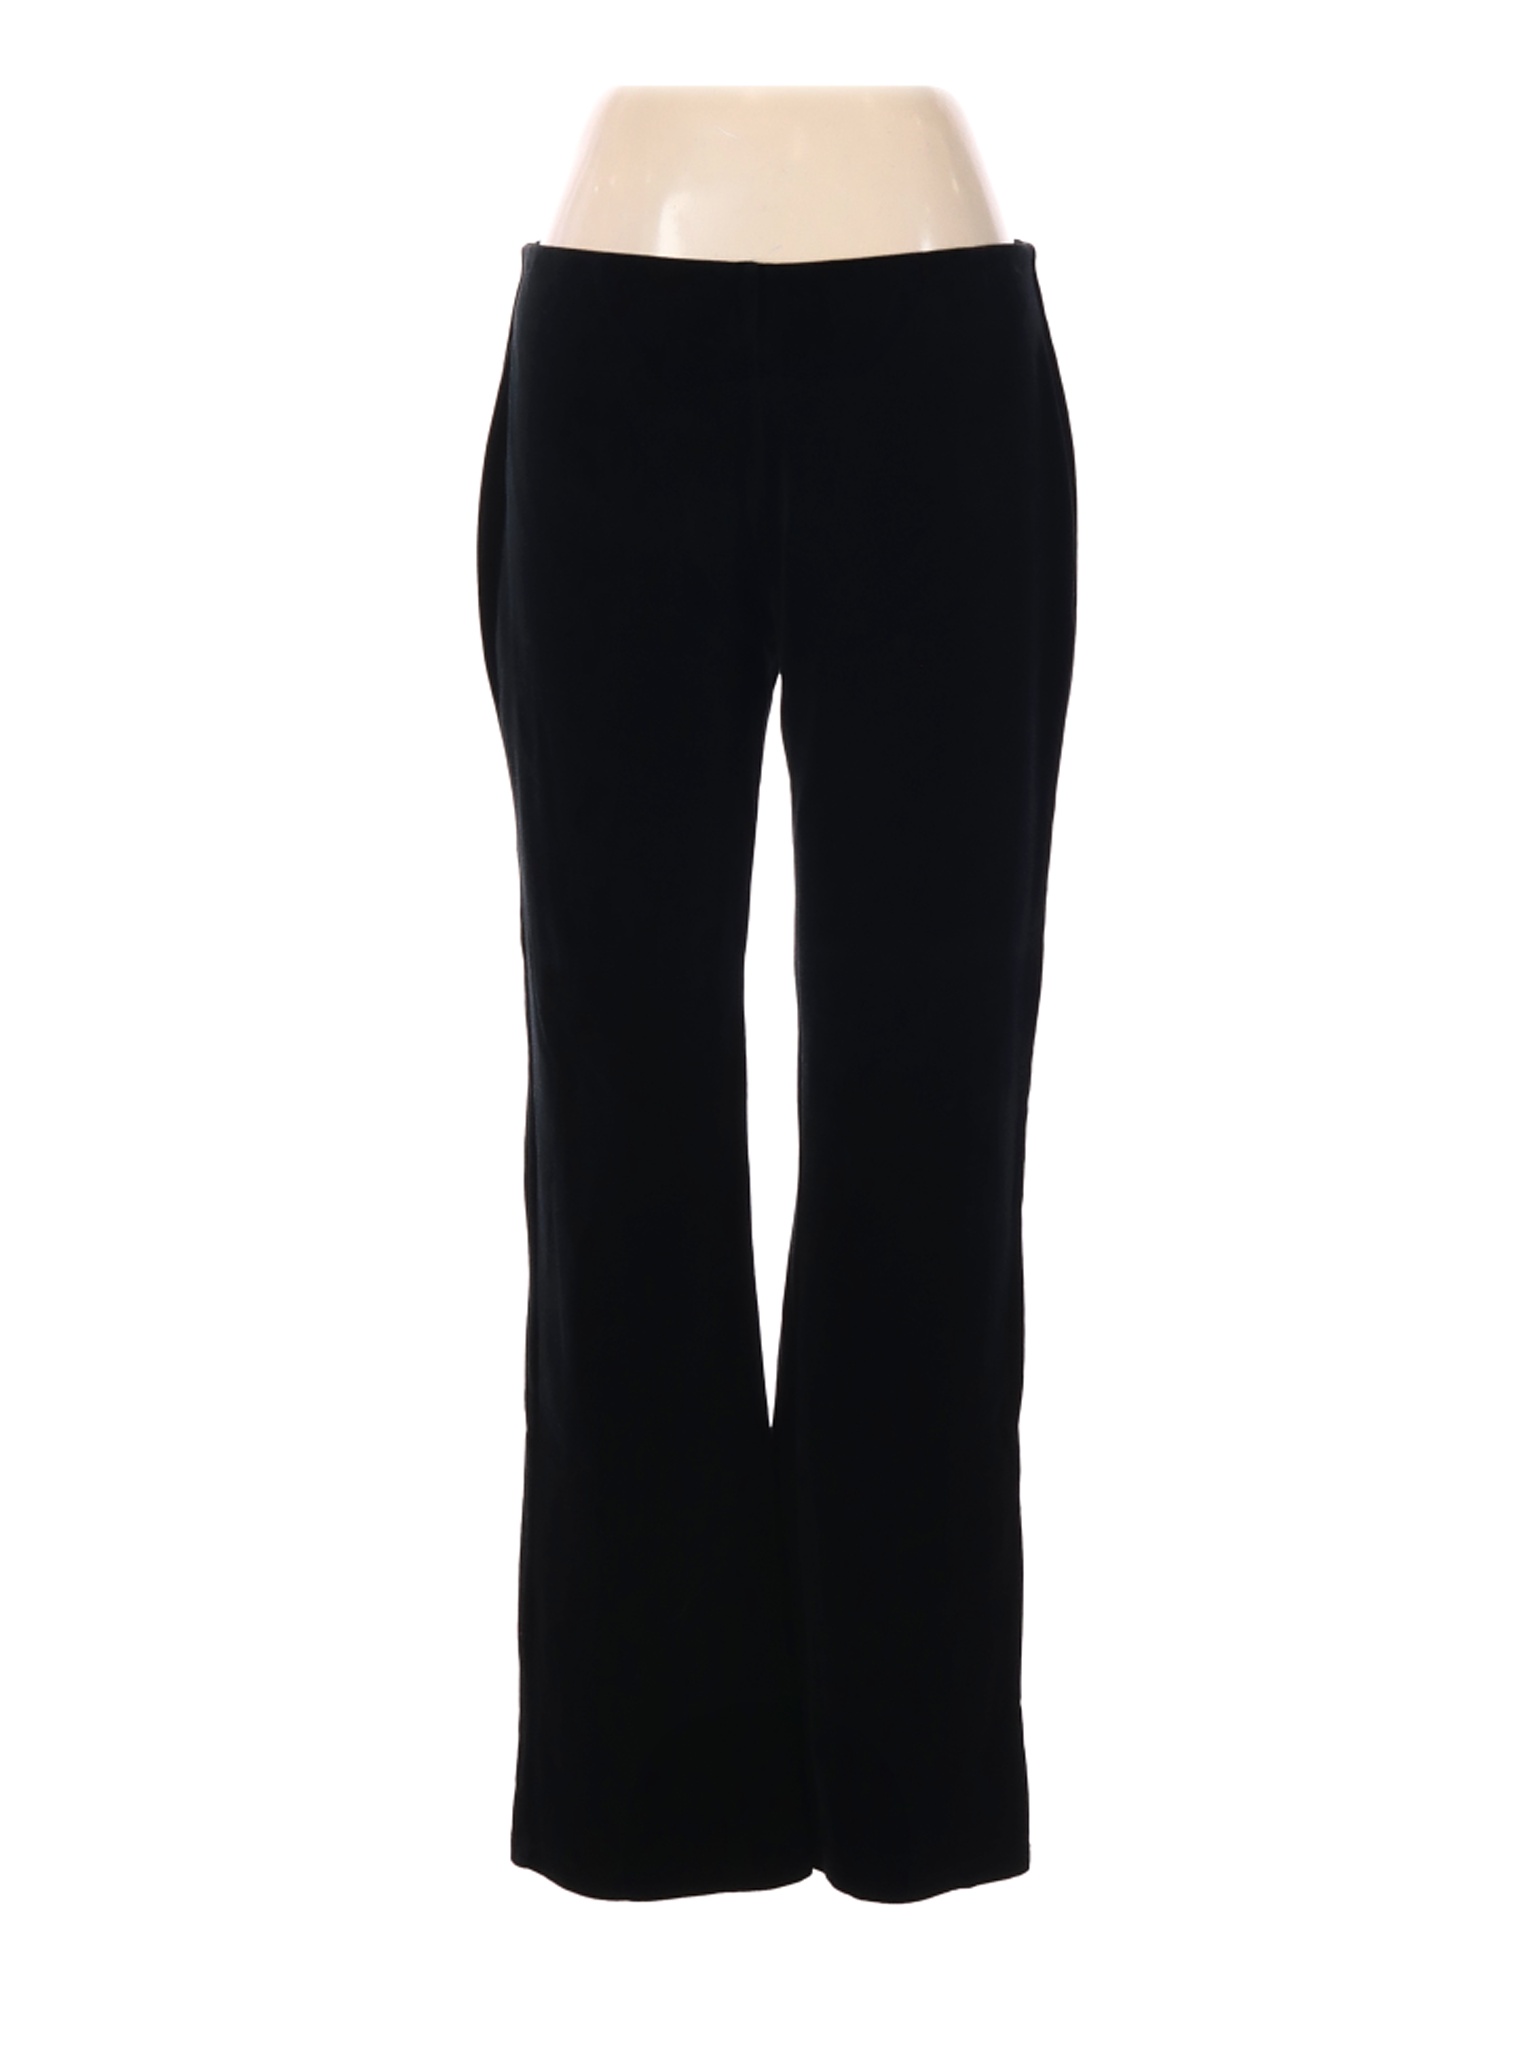 Dana Buchman Women Black Casual Pants L | eBay